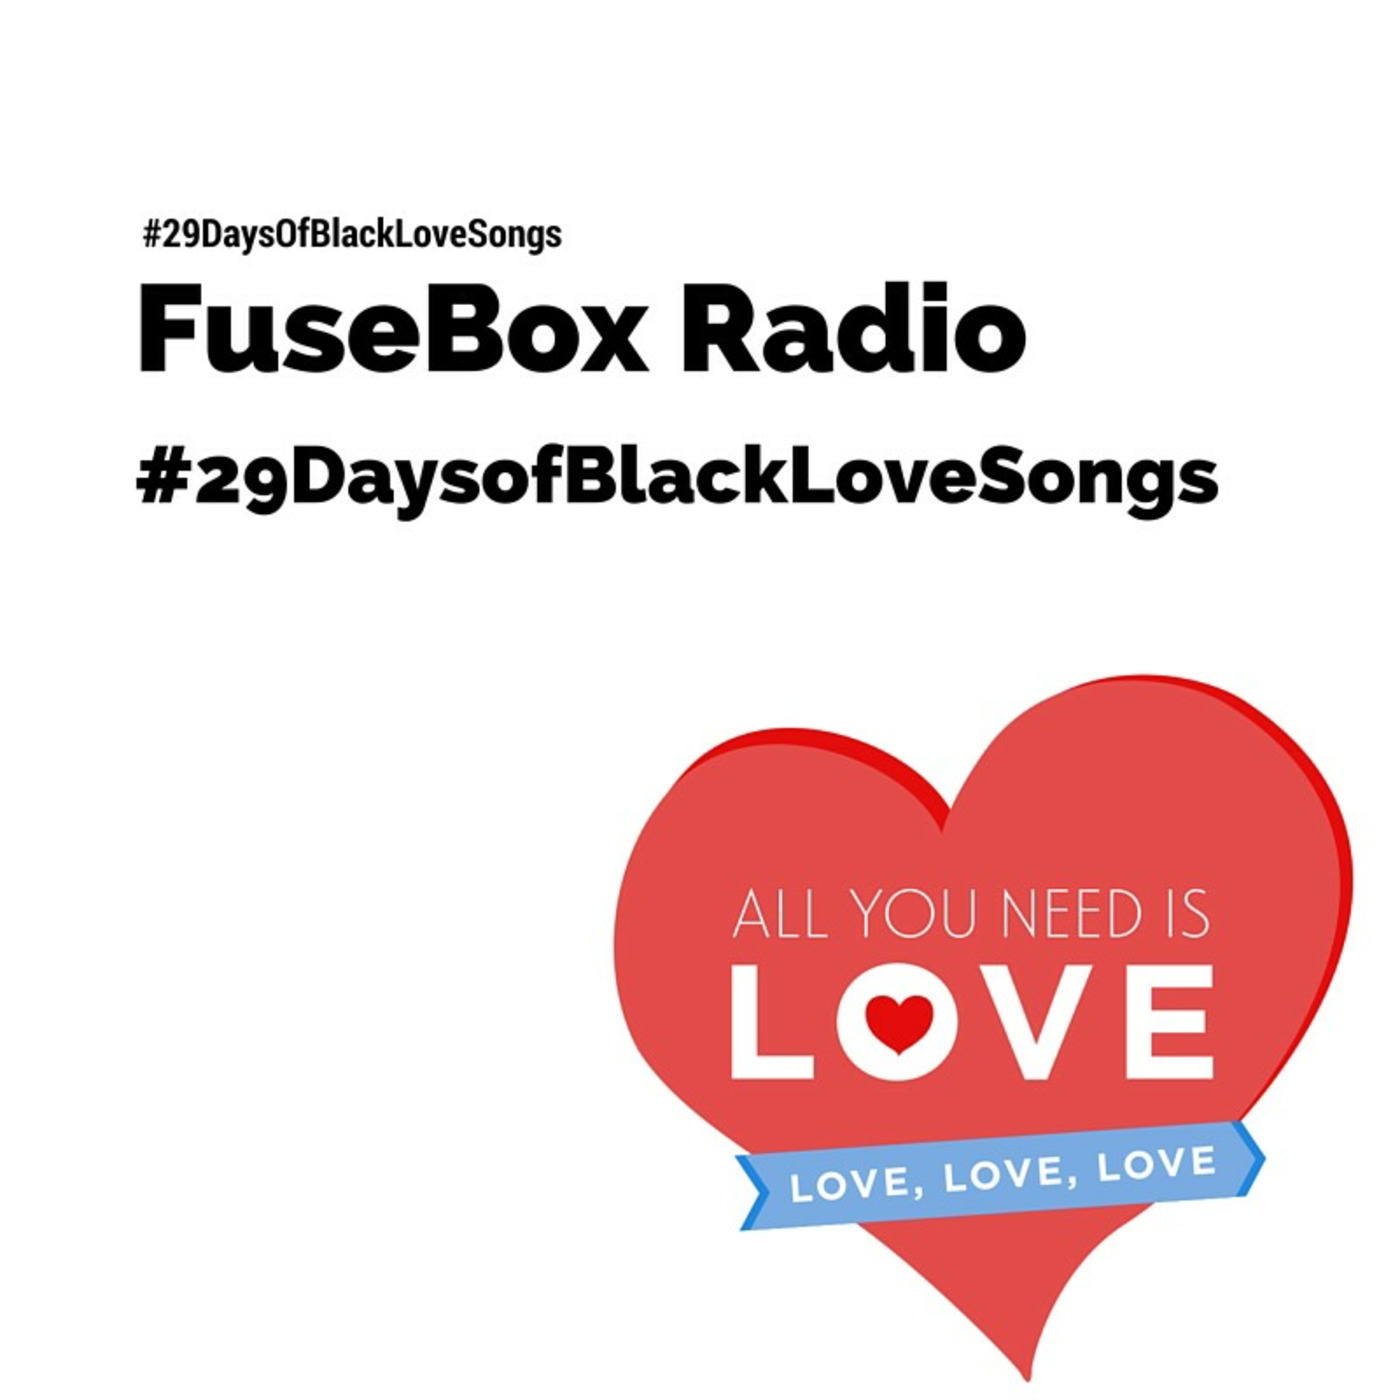 FuseBox Radio #515: FuseBox Radio’s #29DaysofBlackLoveSongs - The Podcast [Week of Feb. 15, 2017]